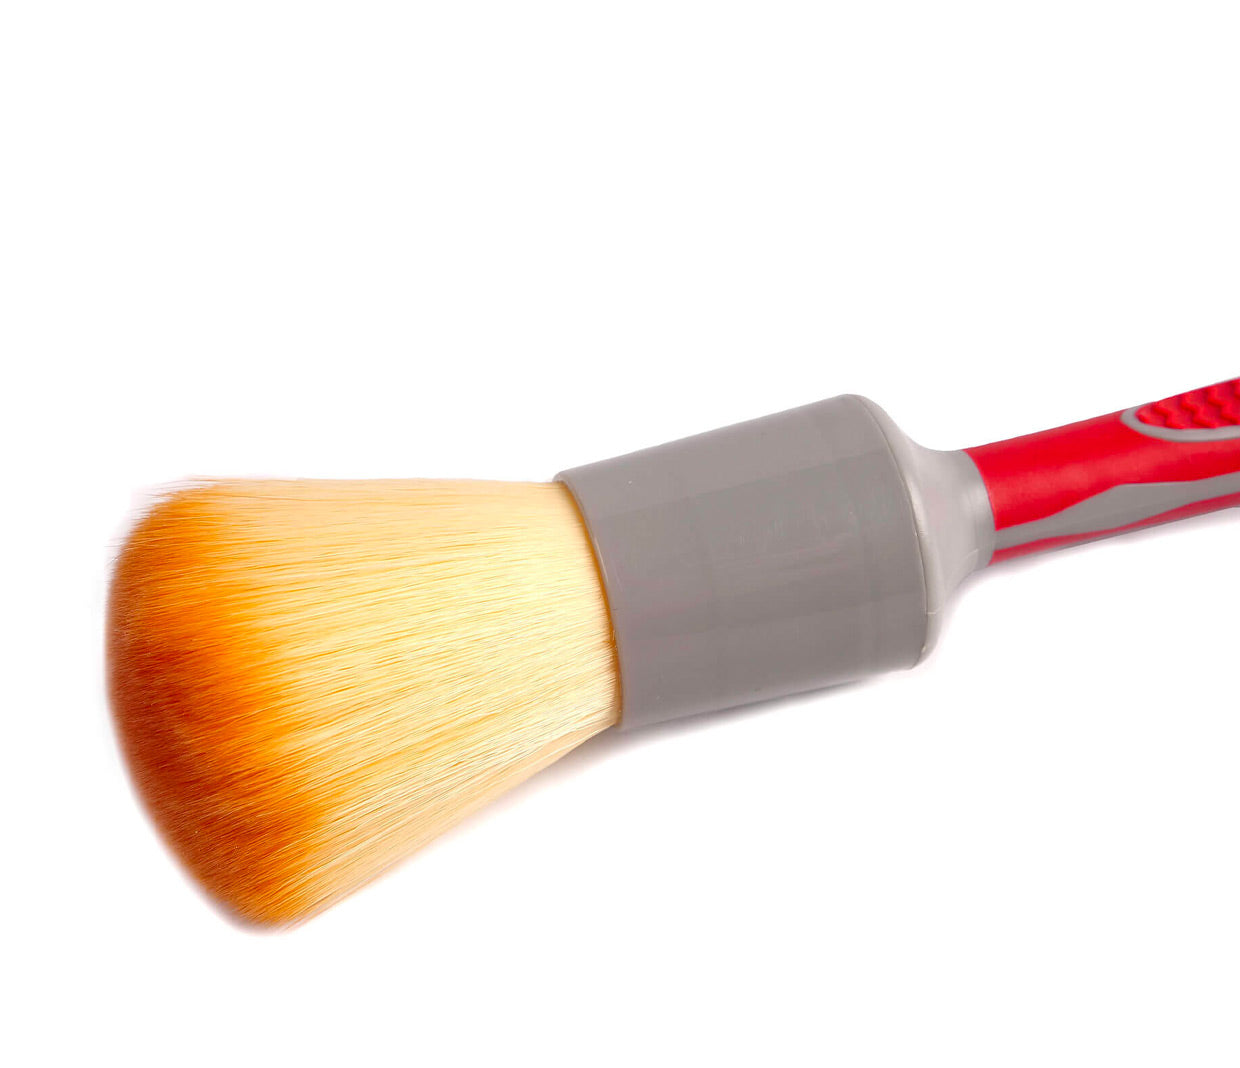 Maxshine Detailing Brush - Red & Grey - Ultra Soft 12mm